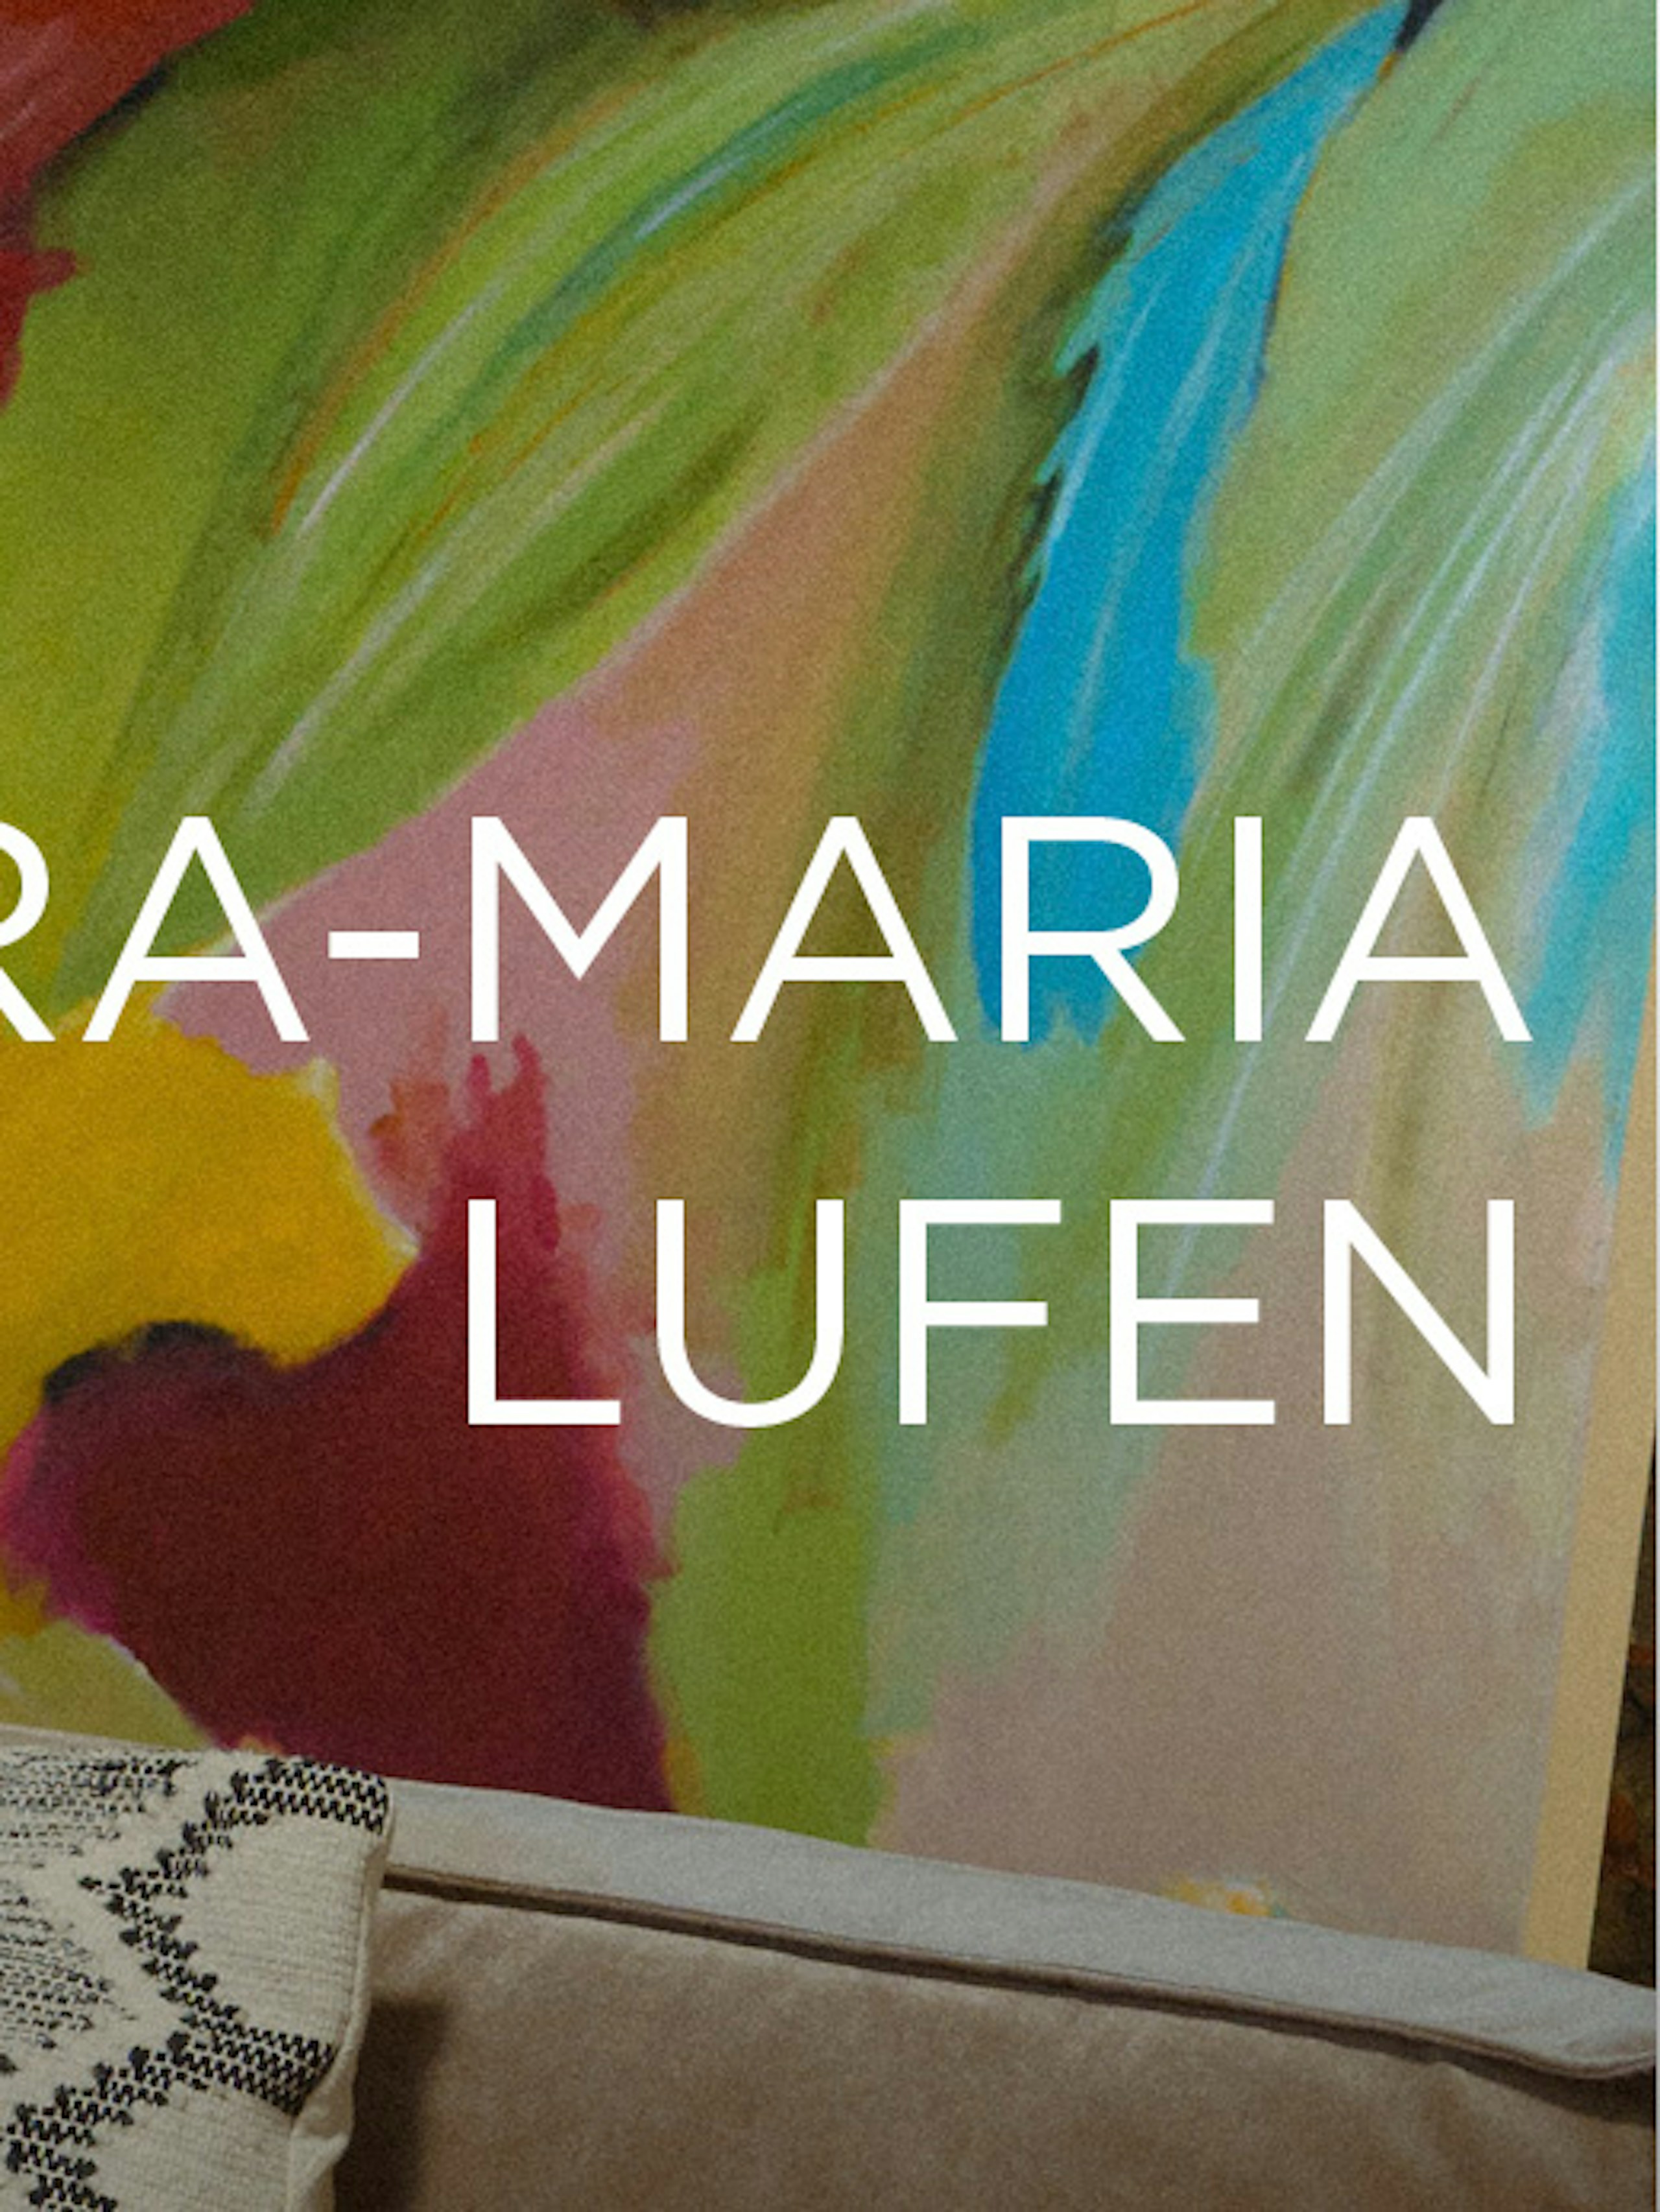 Lara-Maria Lufen